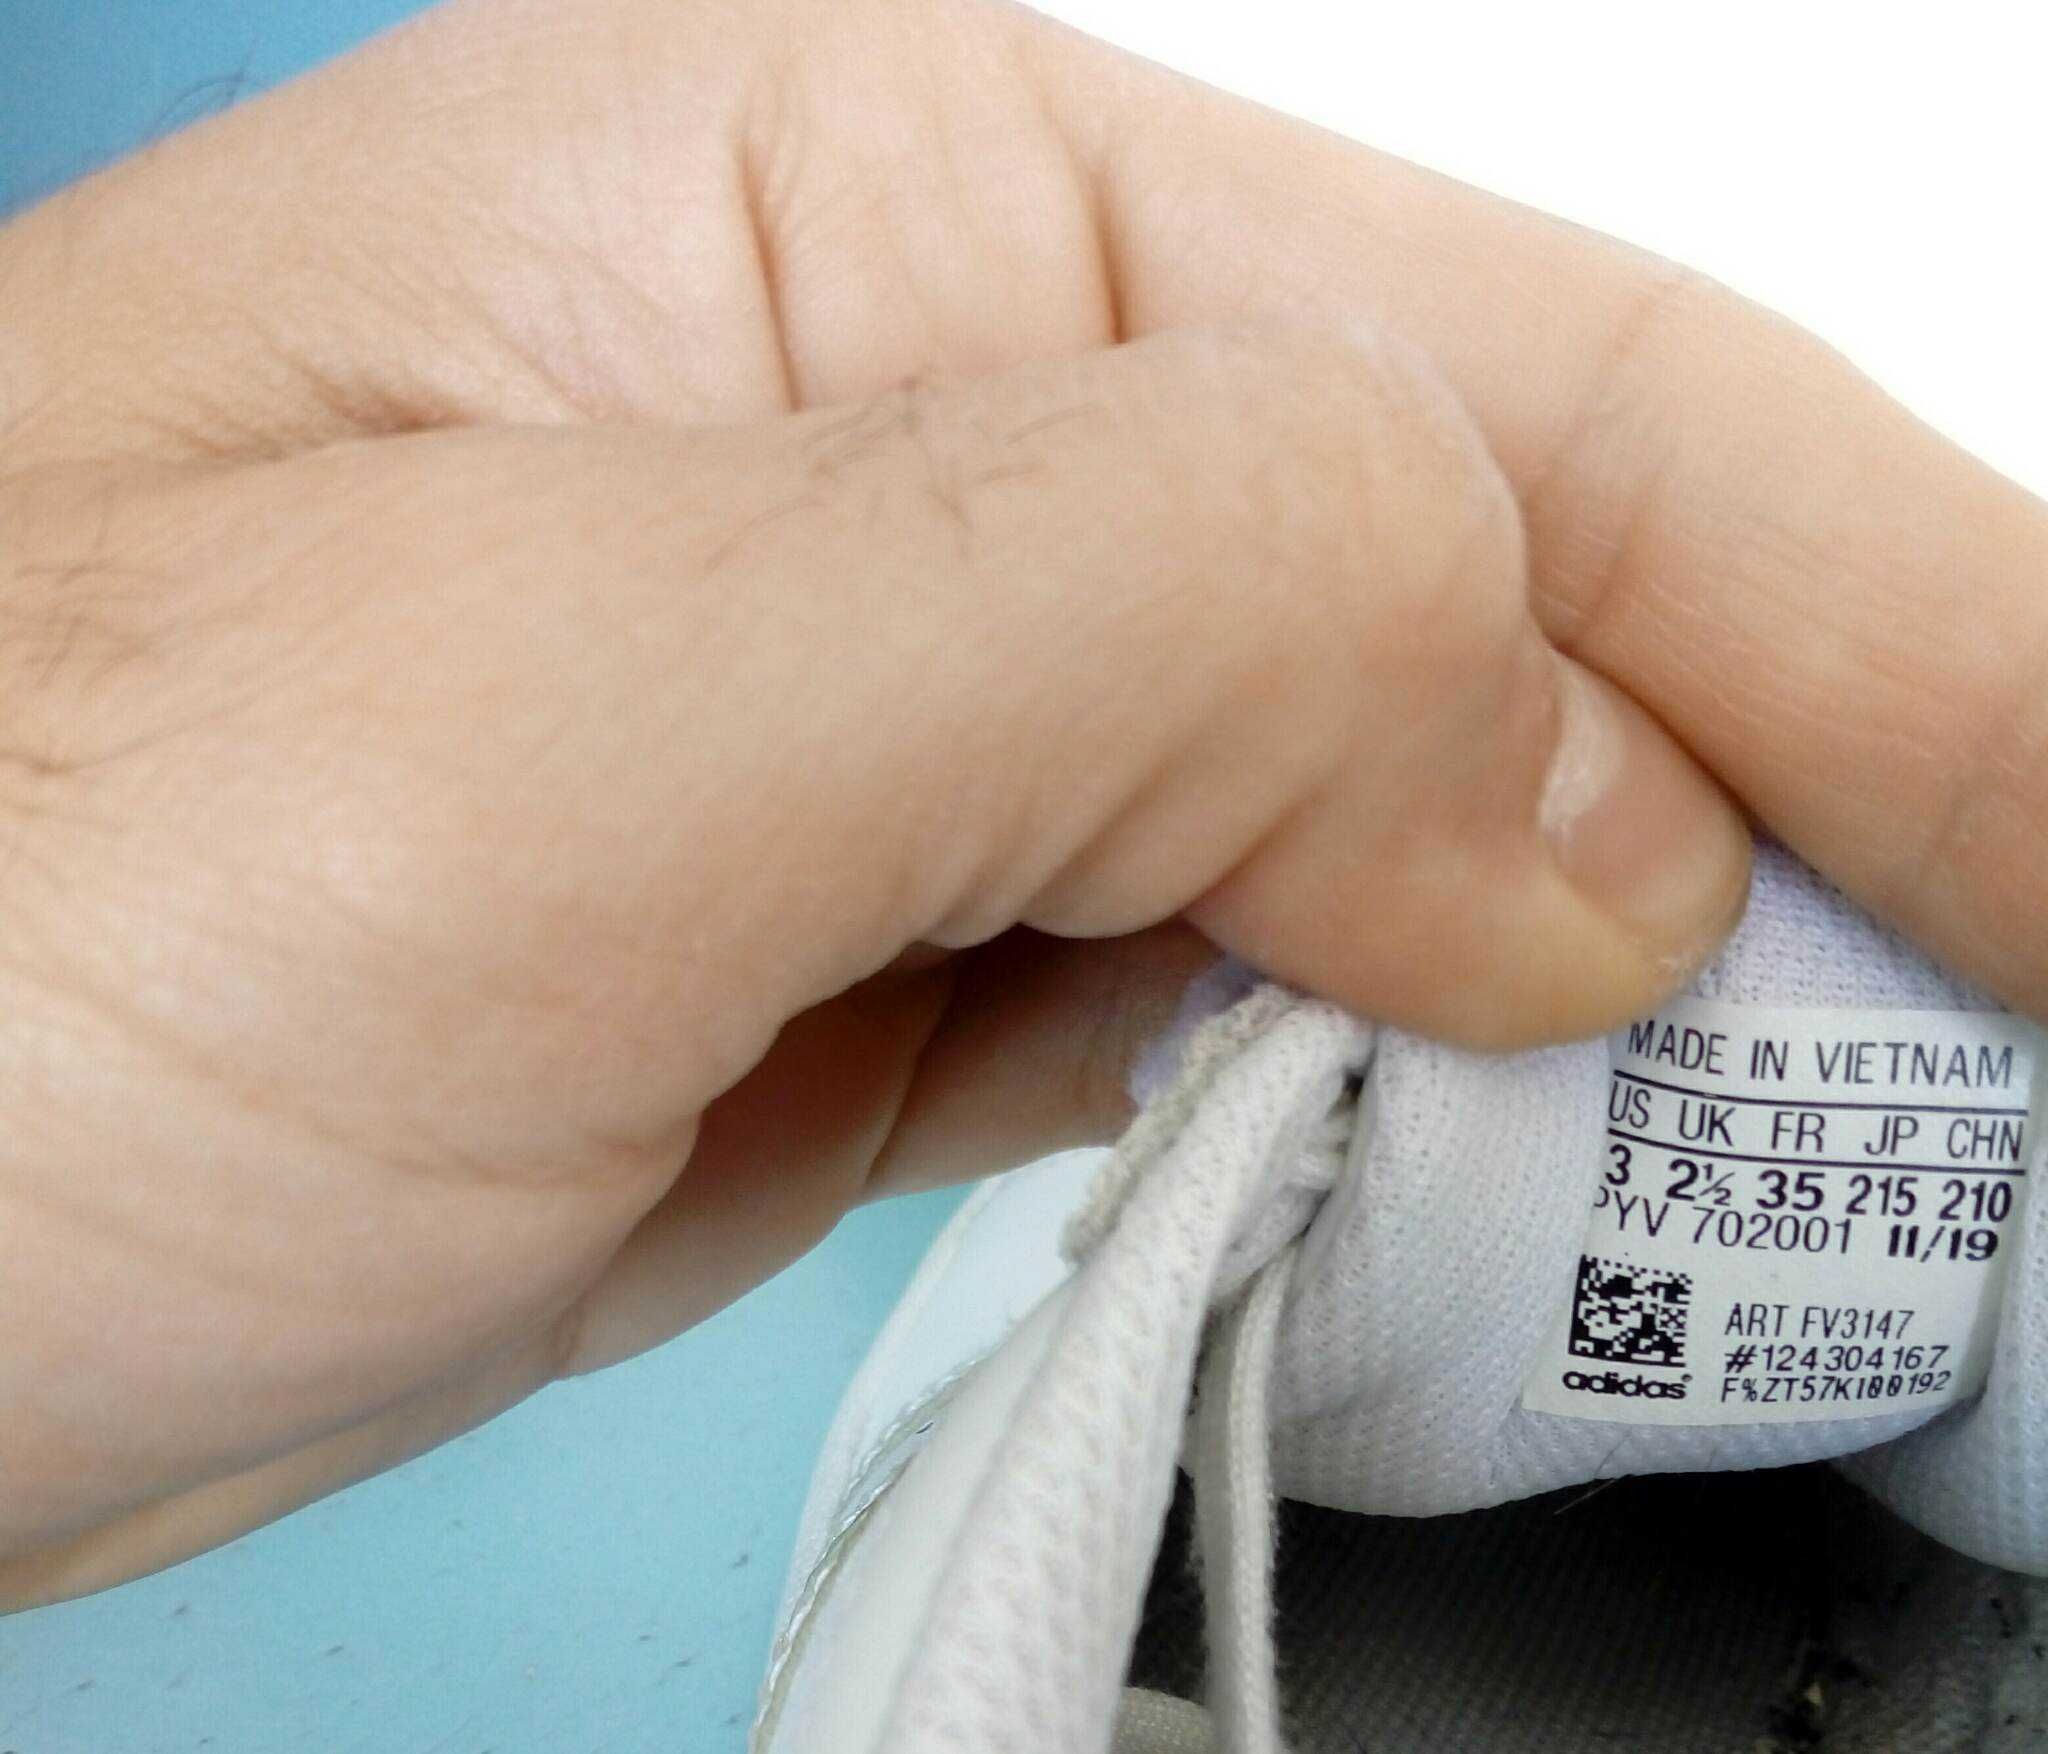 Adidas: оригинални унисекс и дамски  маратонки! Като нови!